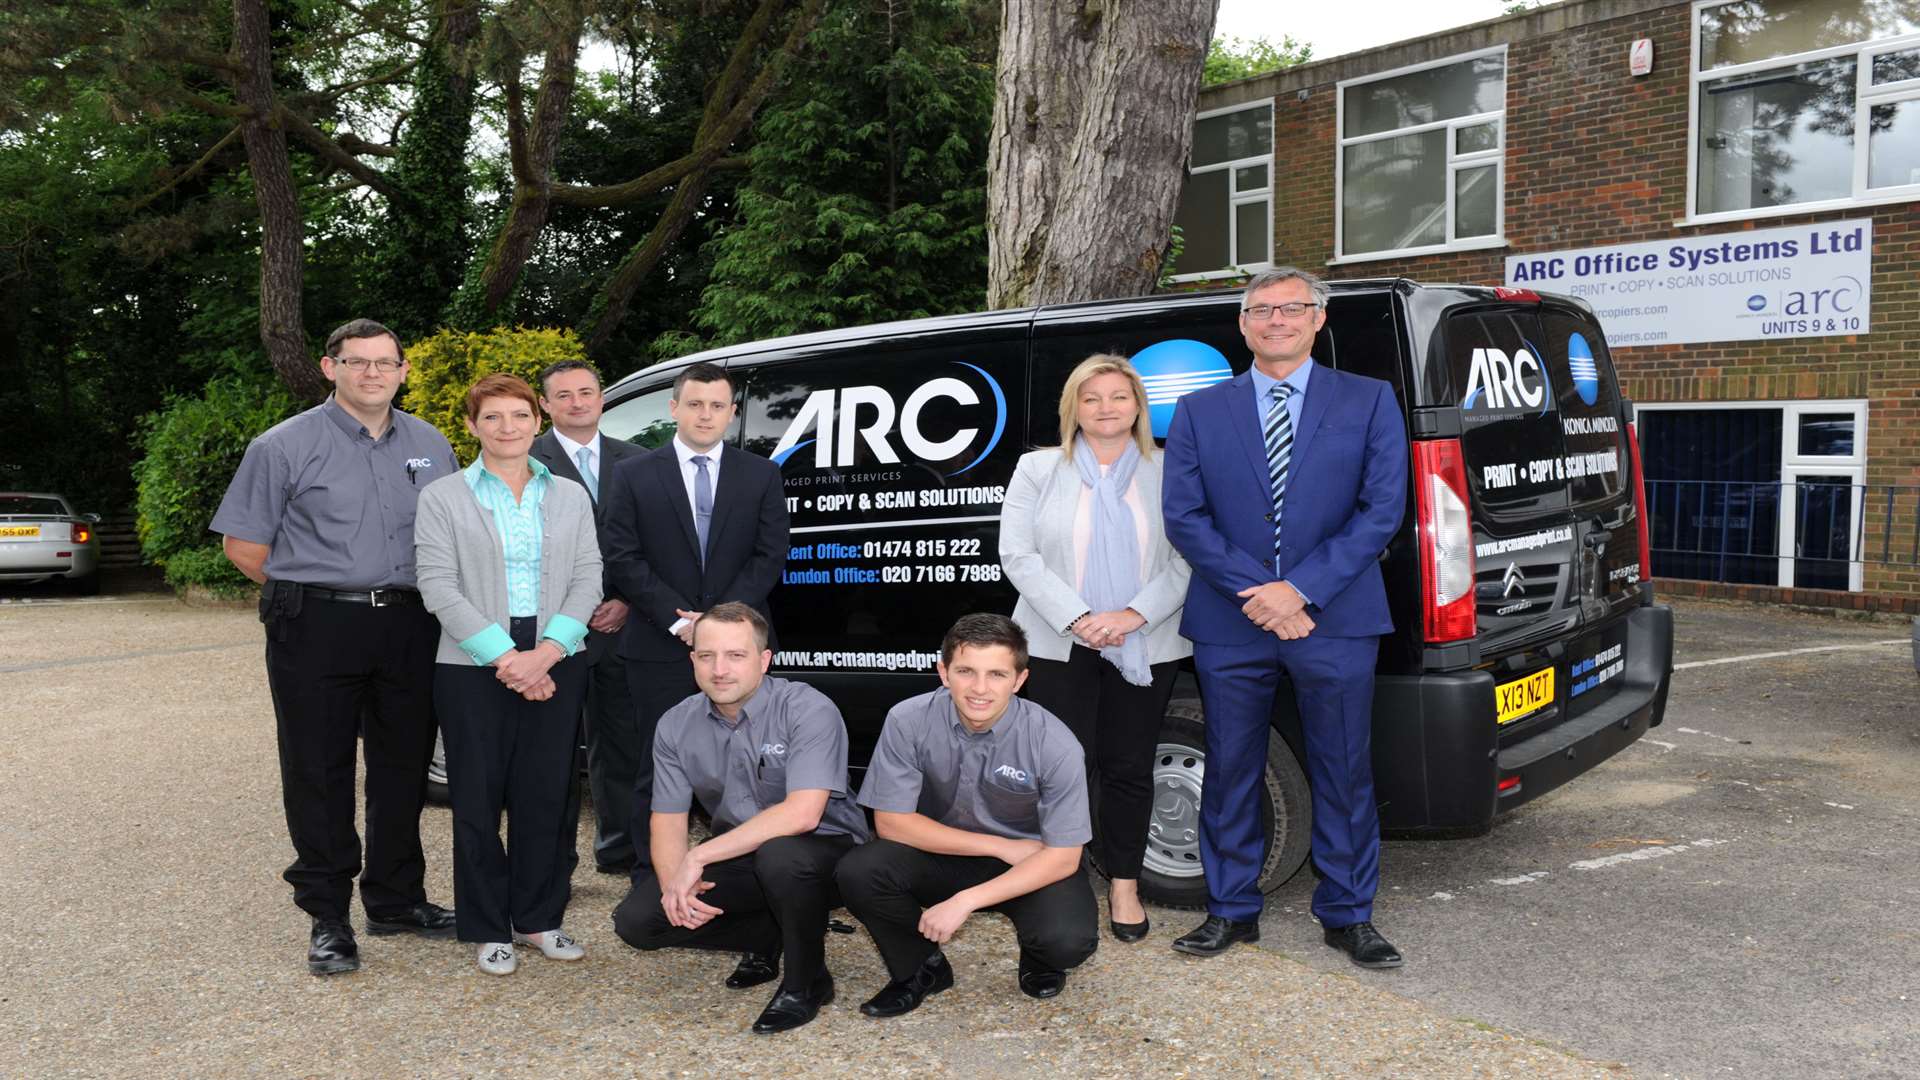 The ARC Office Systems team